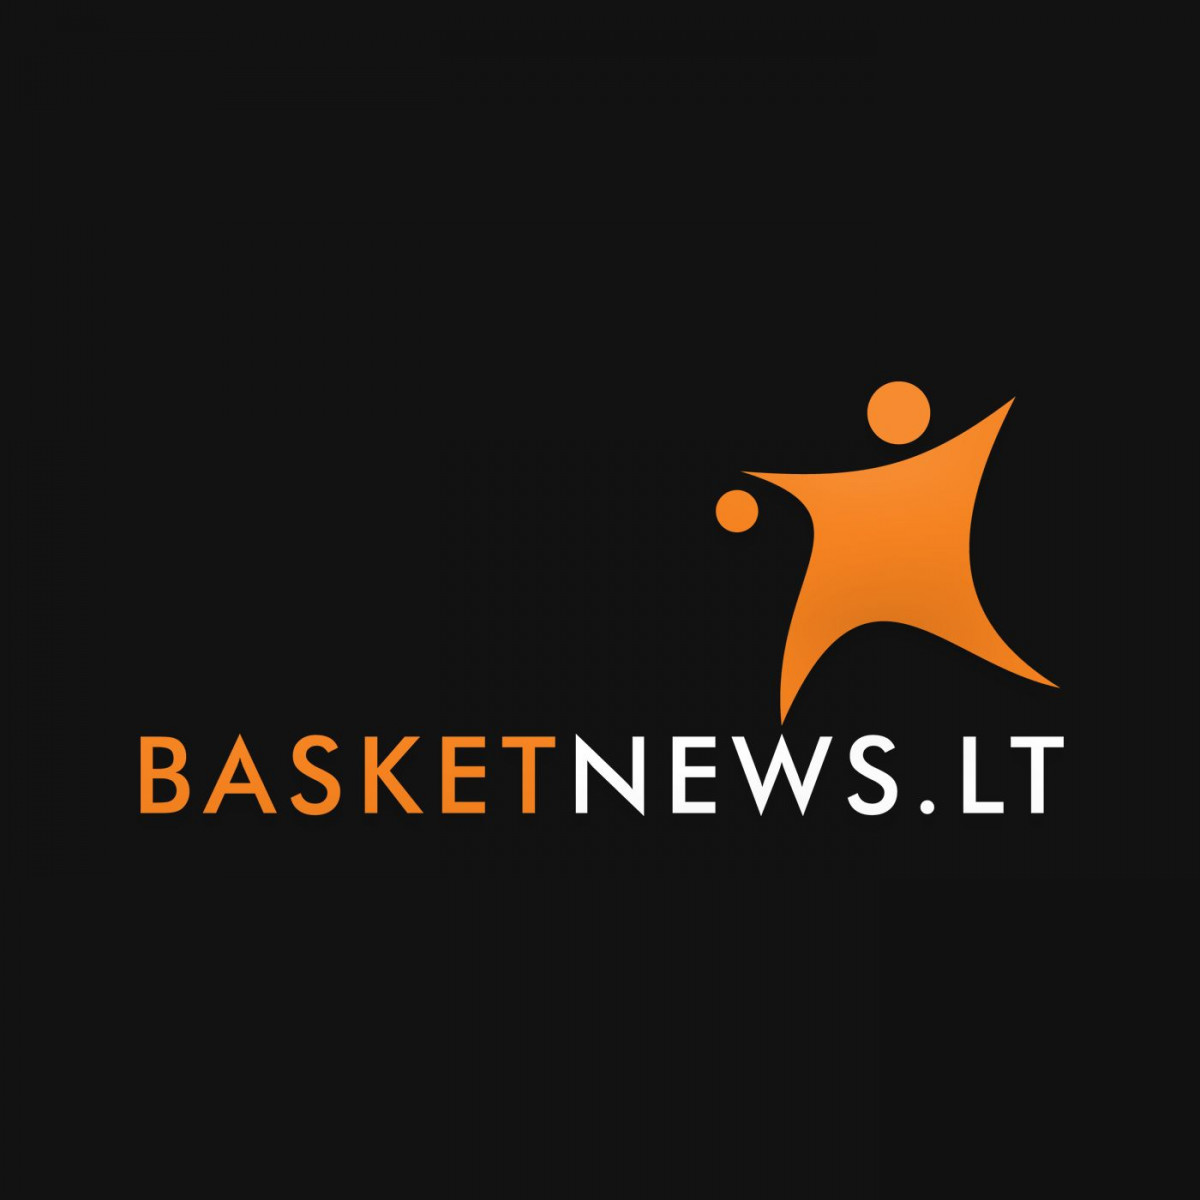 basket news.lt